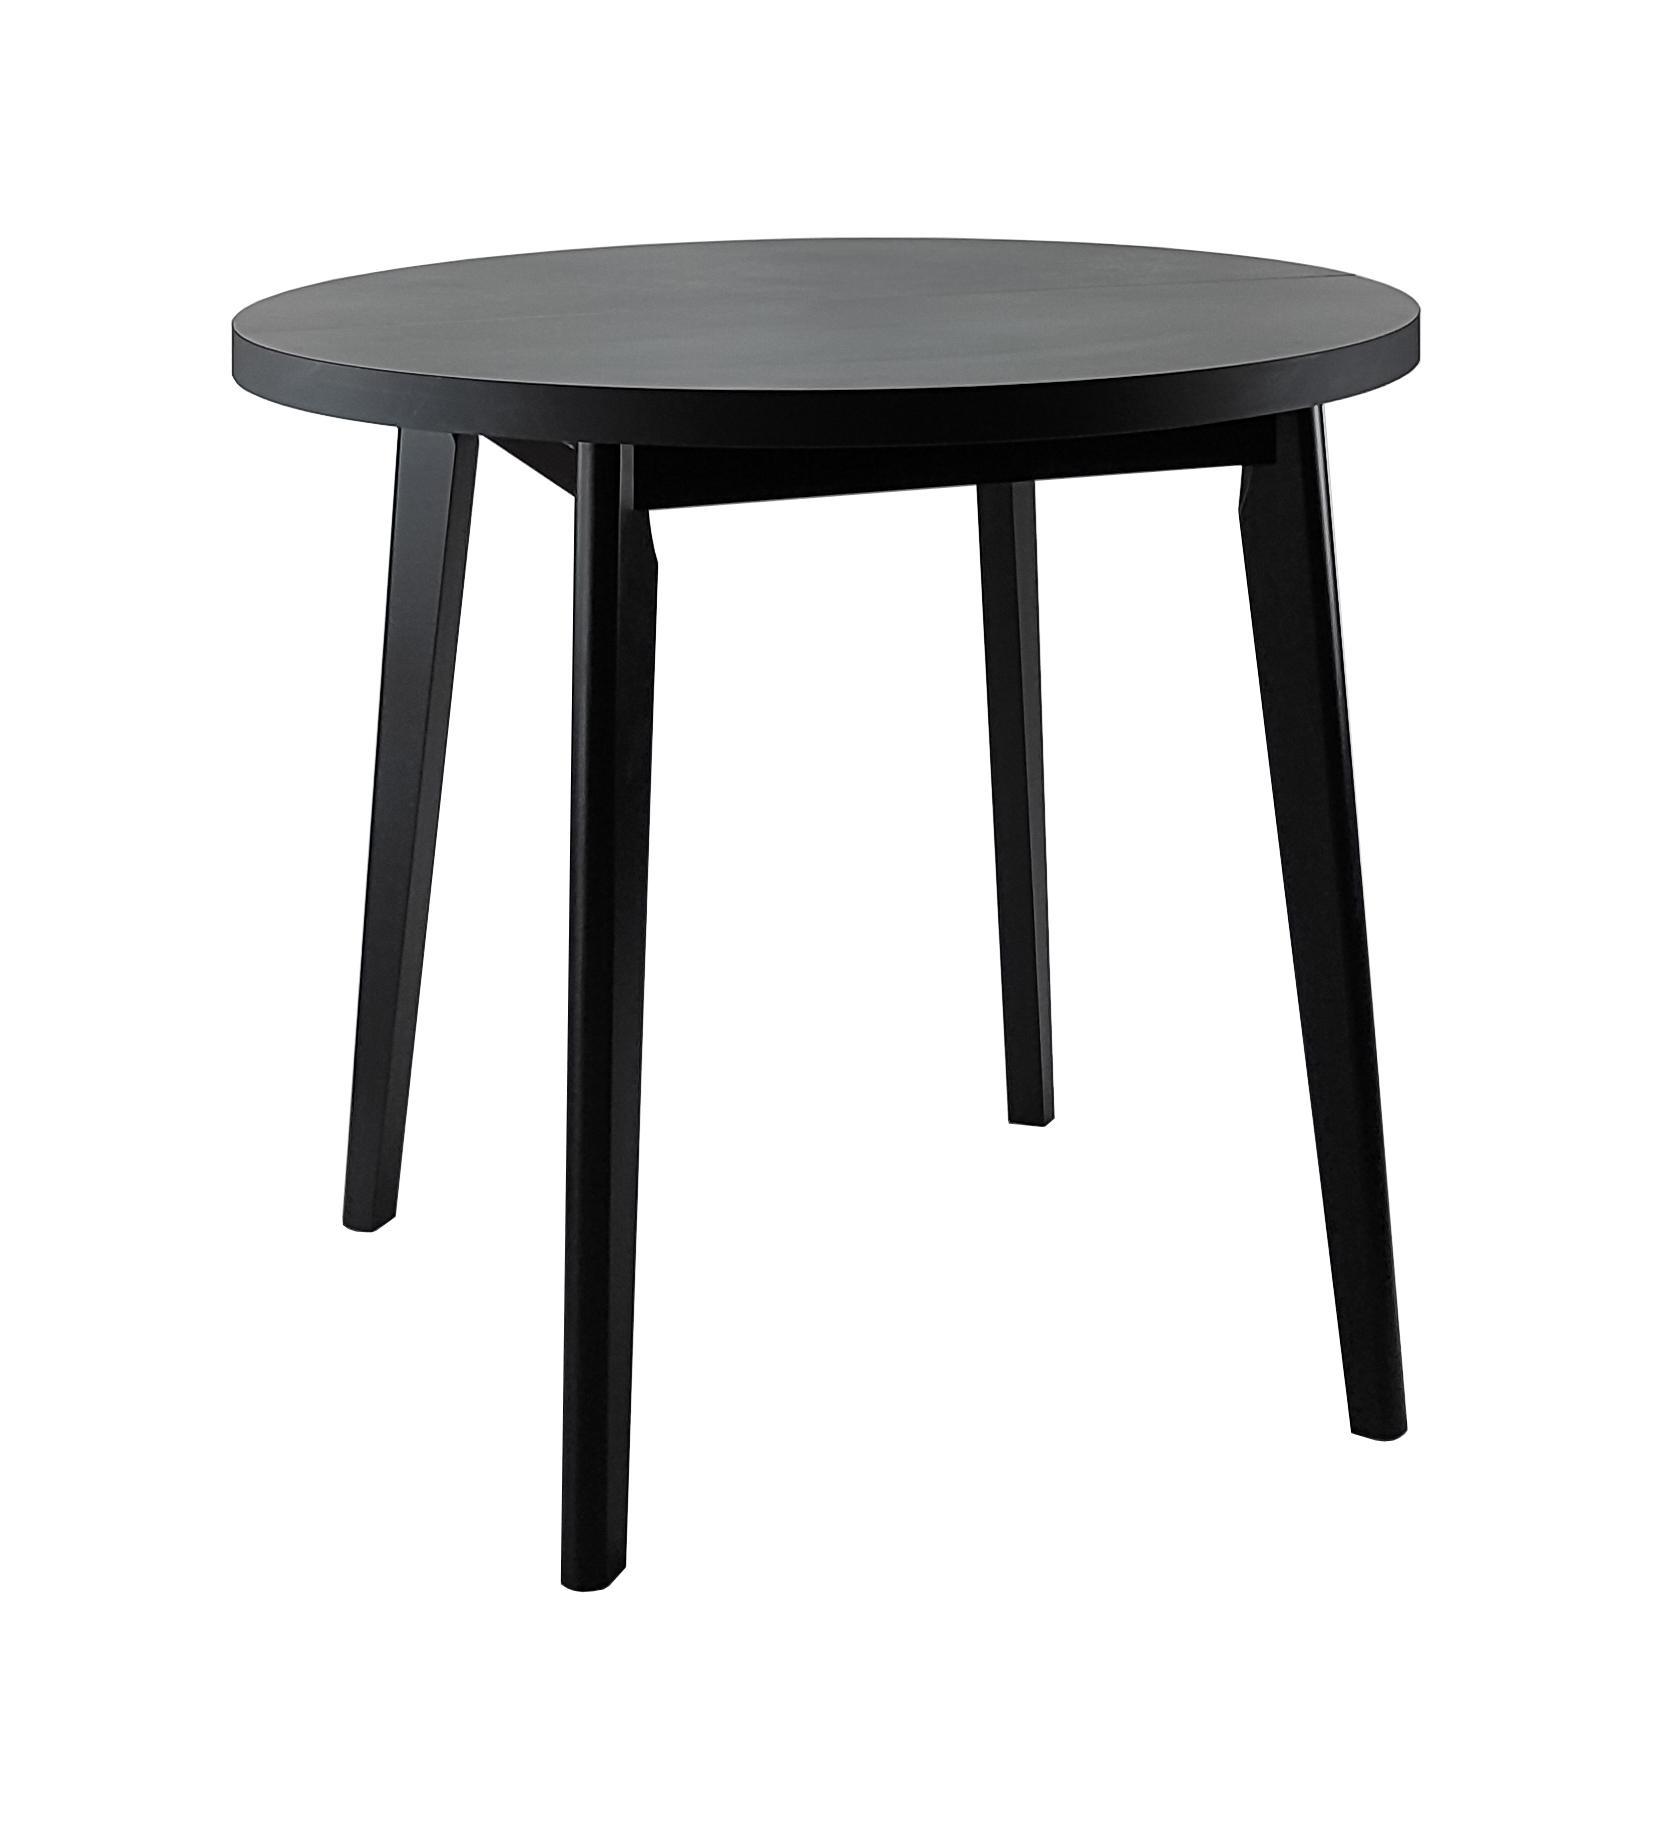 90445904 Кухонный стол круг 90-120 см ЛДСП цвет бетон Dominik STLM-0225297 ТЕРМИНАЛ